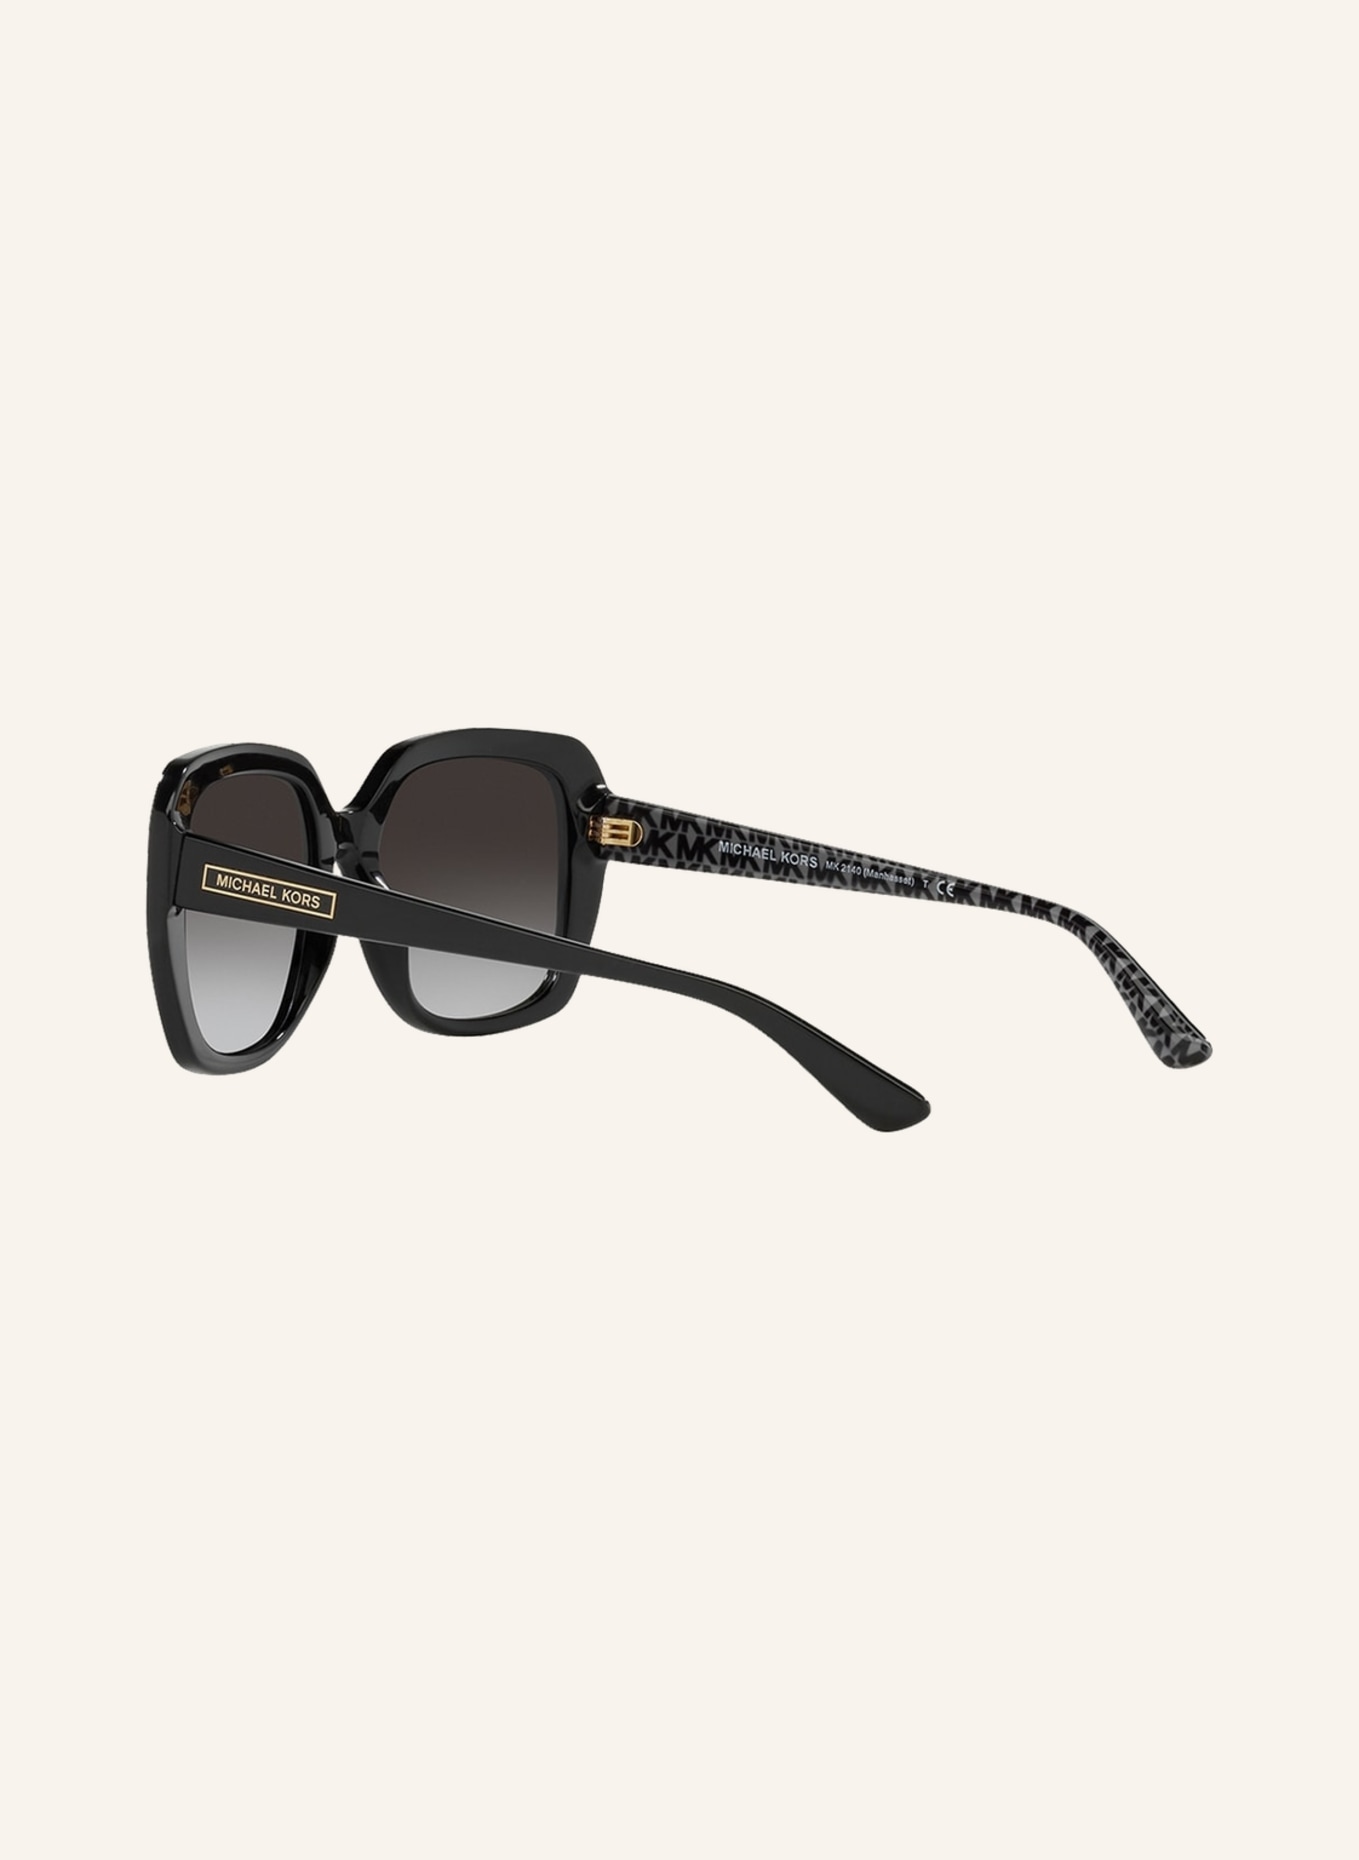 MICHAEL KORS Sunglasses MK-2140 MANHASSET, Color: 30058G - BLACK/GRAY GRADIENT (Image 4)